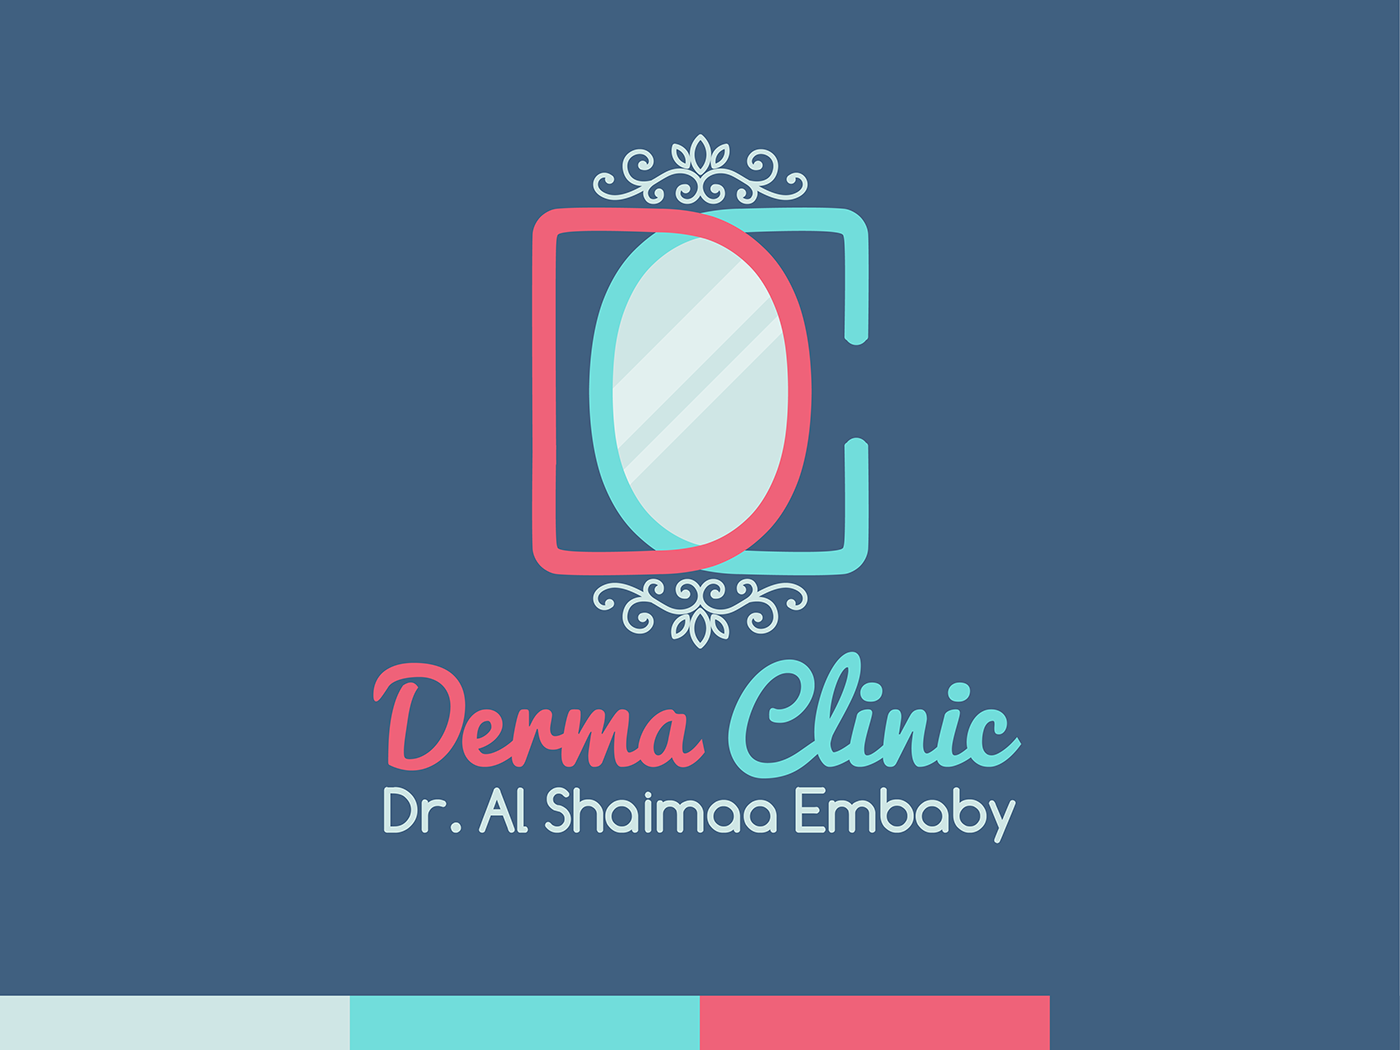 logo derma clinic branding  ceartive beauty skin laser hair Removal